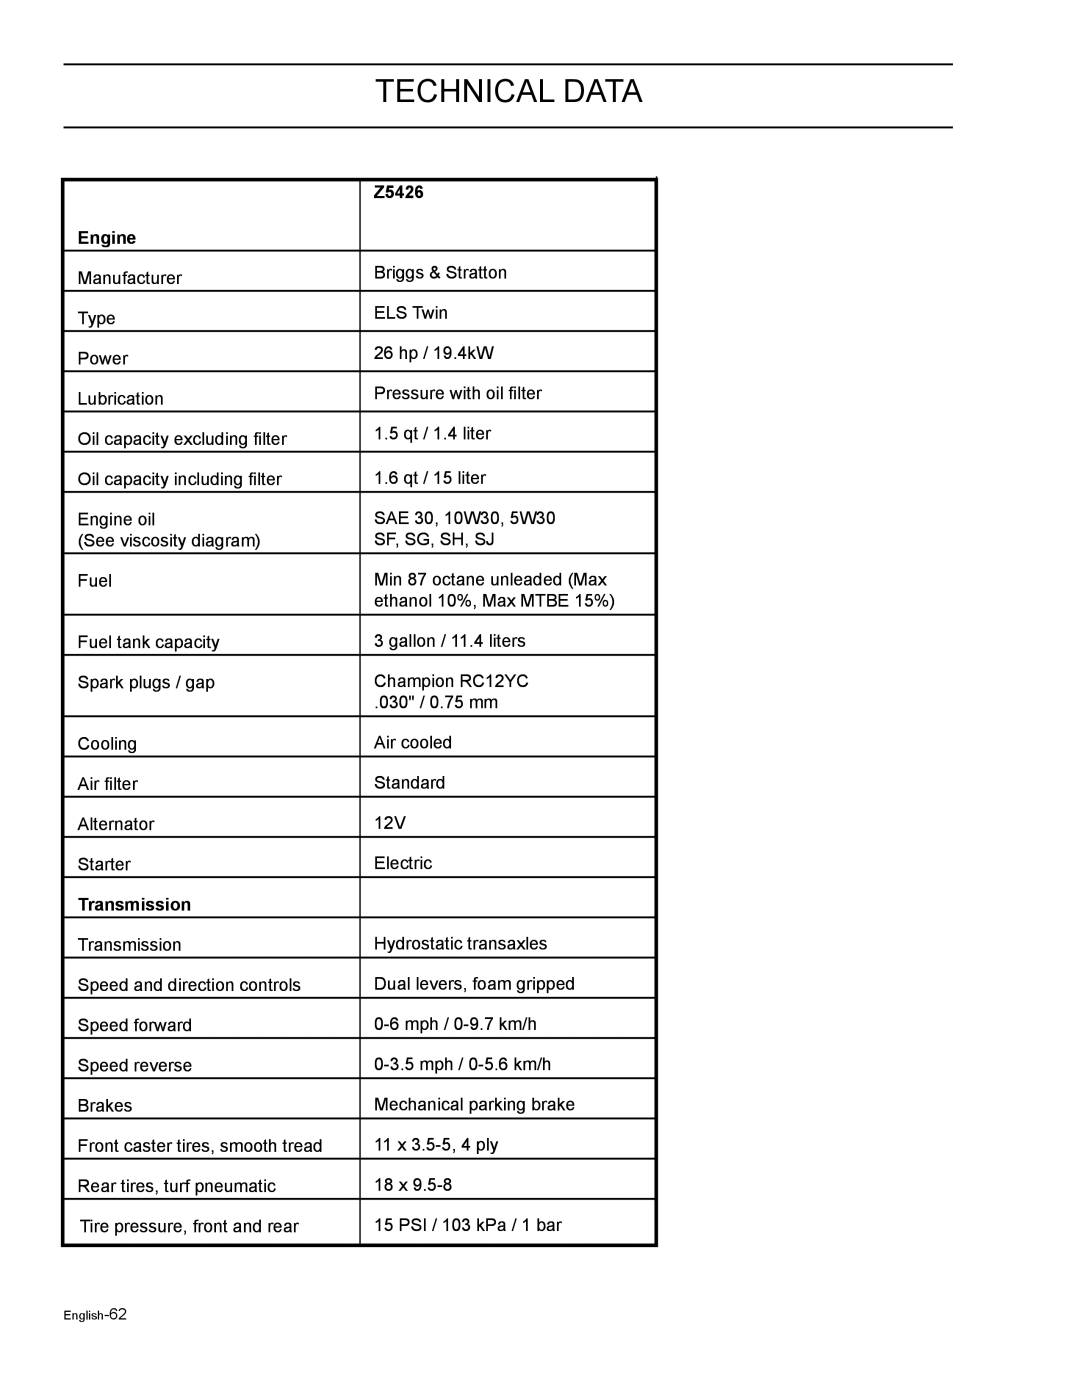 HTC Z5426BF, Z4220BF, Z4824BF, Z4619BF, Z4219BF manual Technical Data, Engine, Transmission 